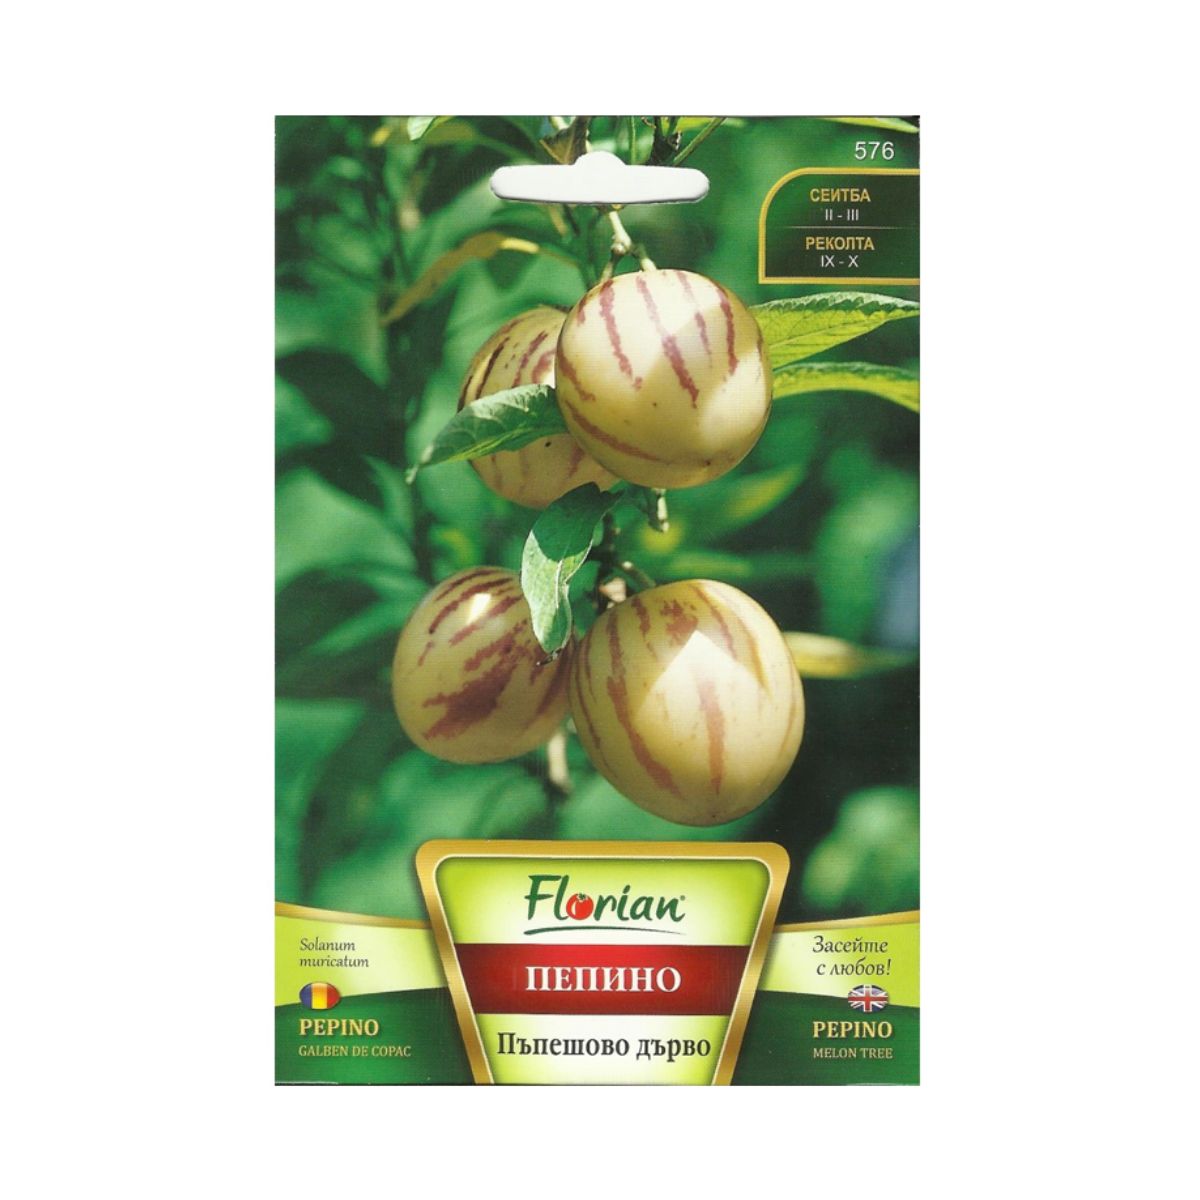 Pepene - Seminte de pepene galben de copac PEPINO, 10 seminte, FLORIAN, hectarul.ro